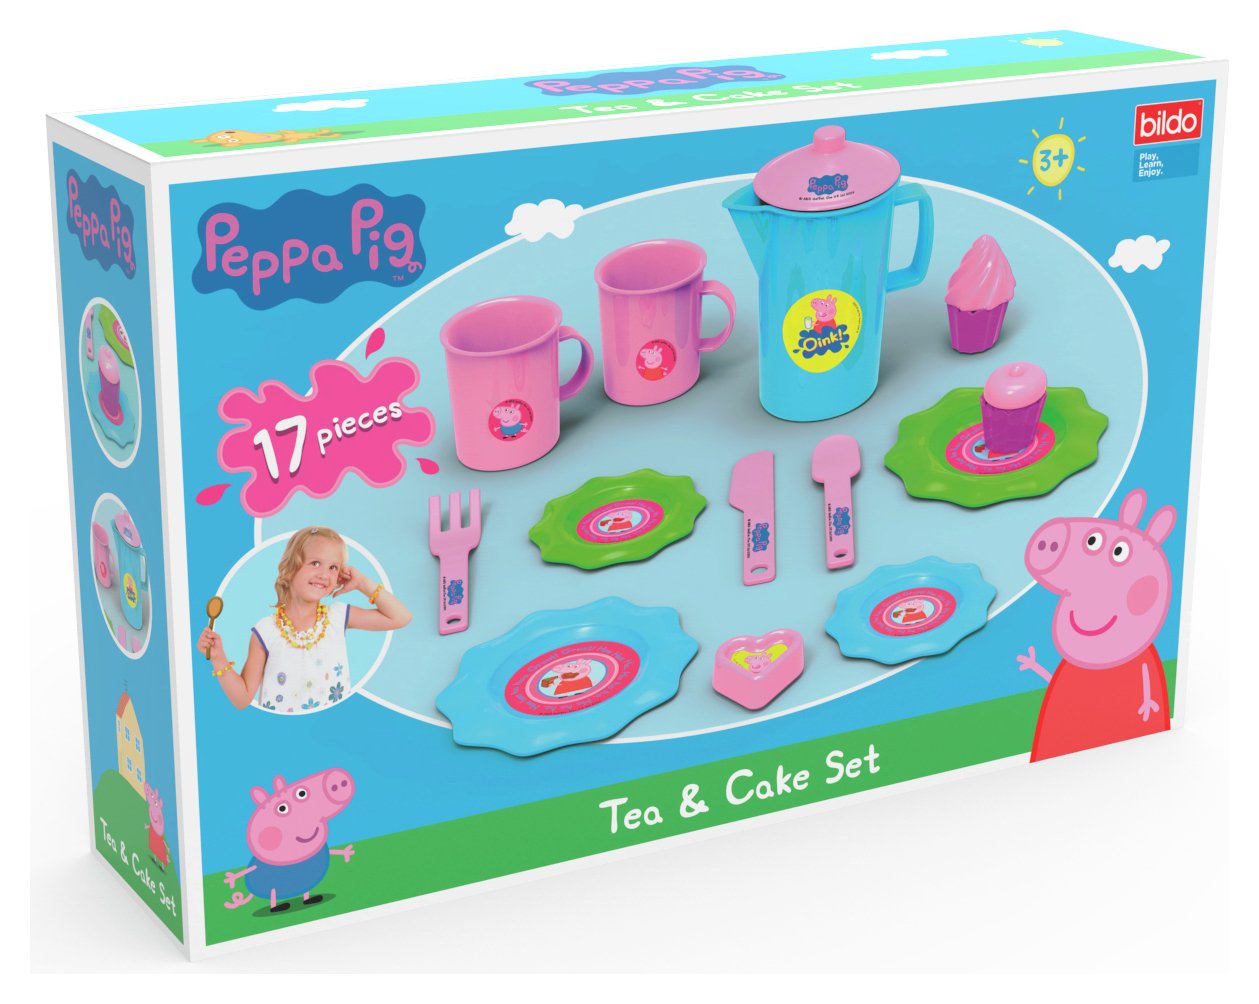 Peppa Pig 17 Piece Tea Set review